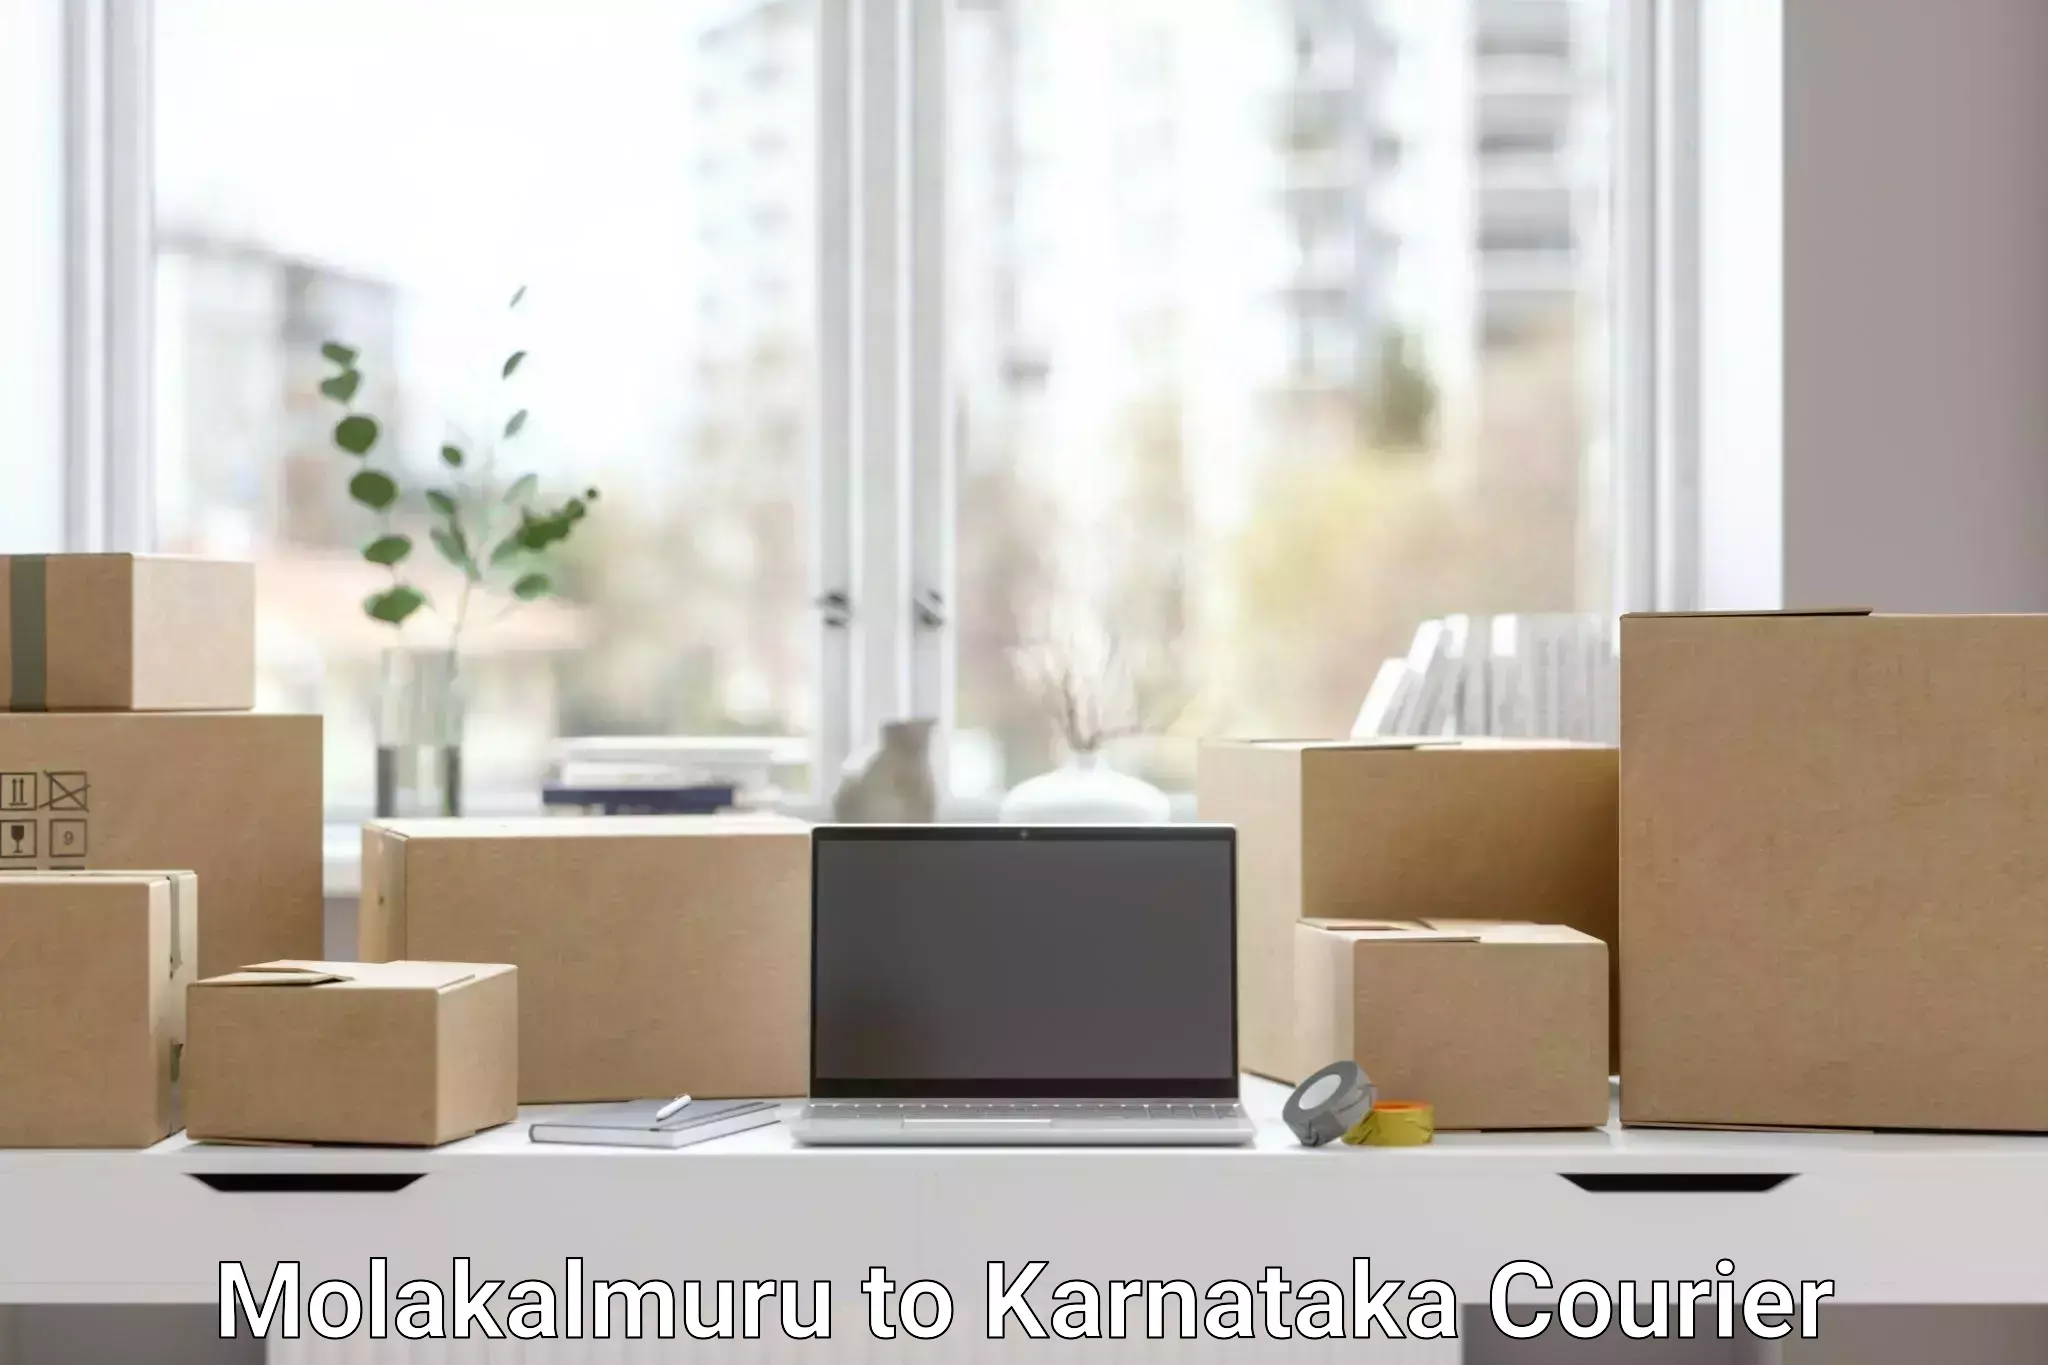 Round-the-clock parcel delivery in Molakalmuru to Karnataka